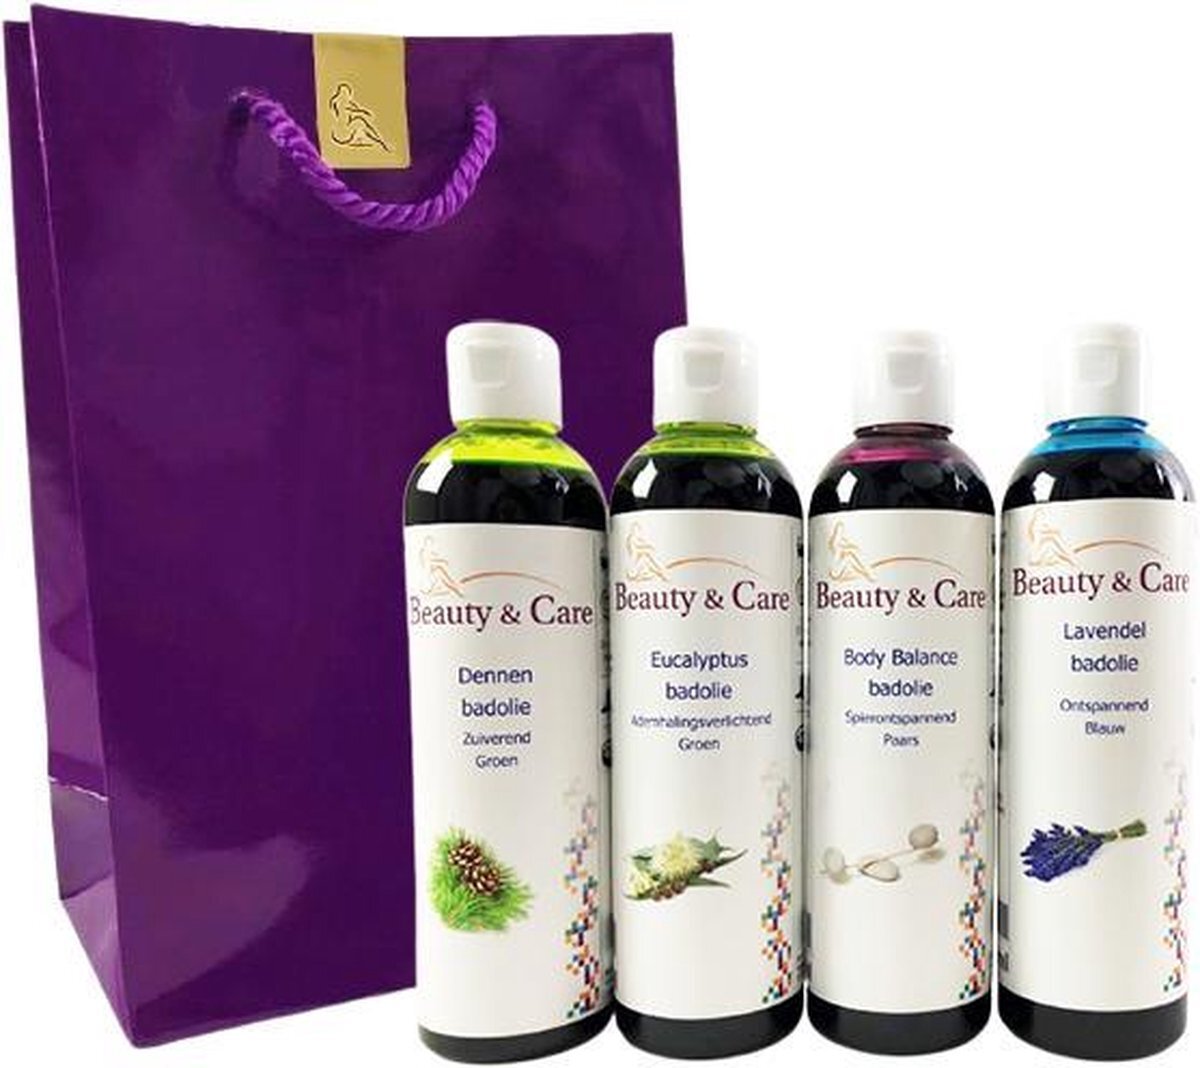 Beauty & Care Cadeaupakket badolie XL - Eucalyptus badolie - Body Balance badolie - Lavendel badolie - Dennen badolie